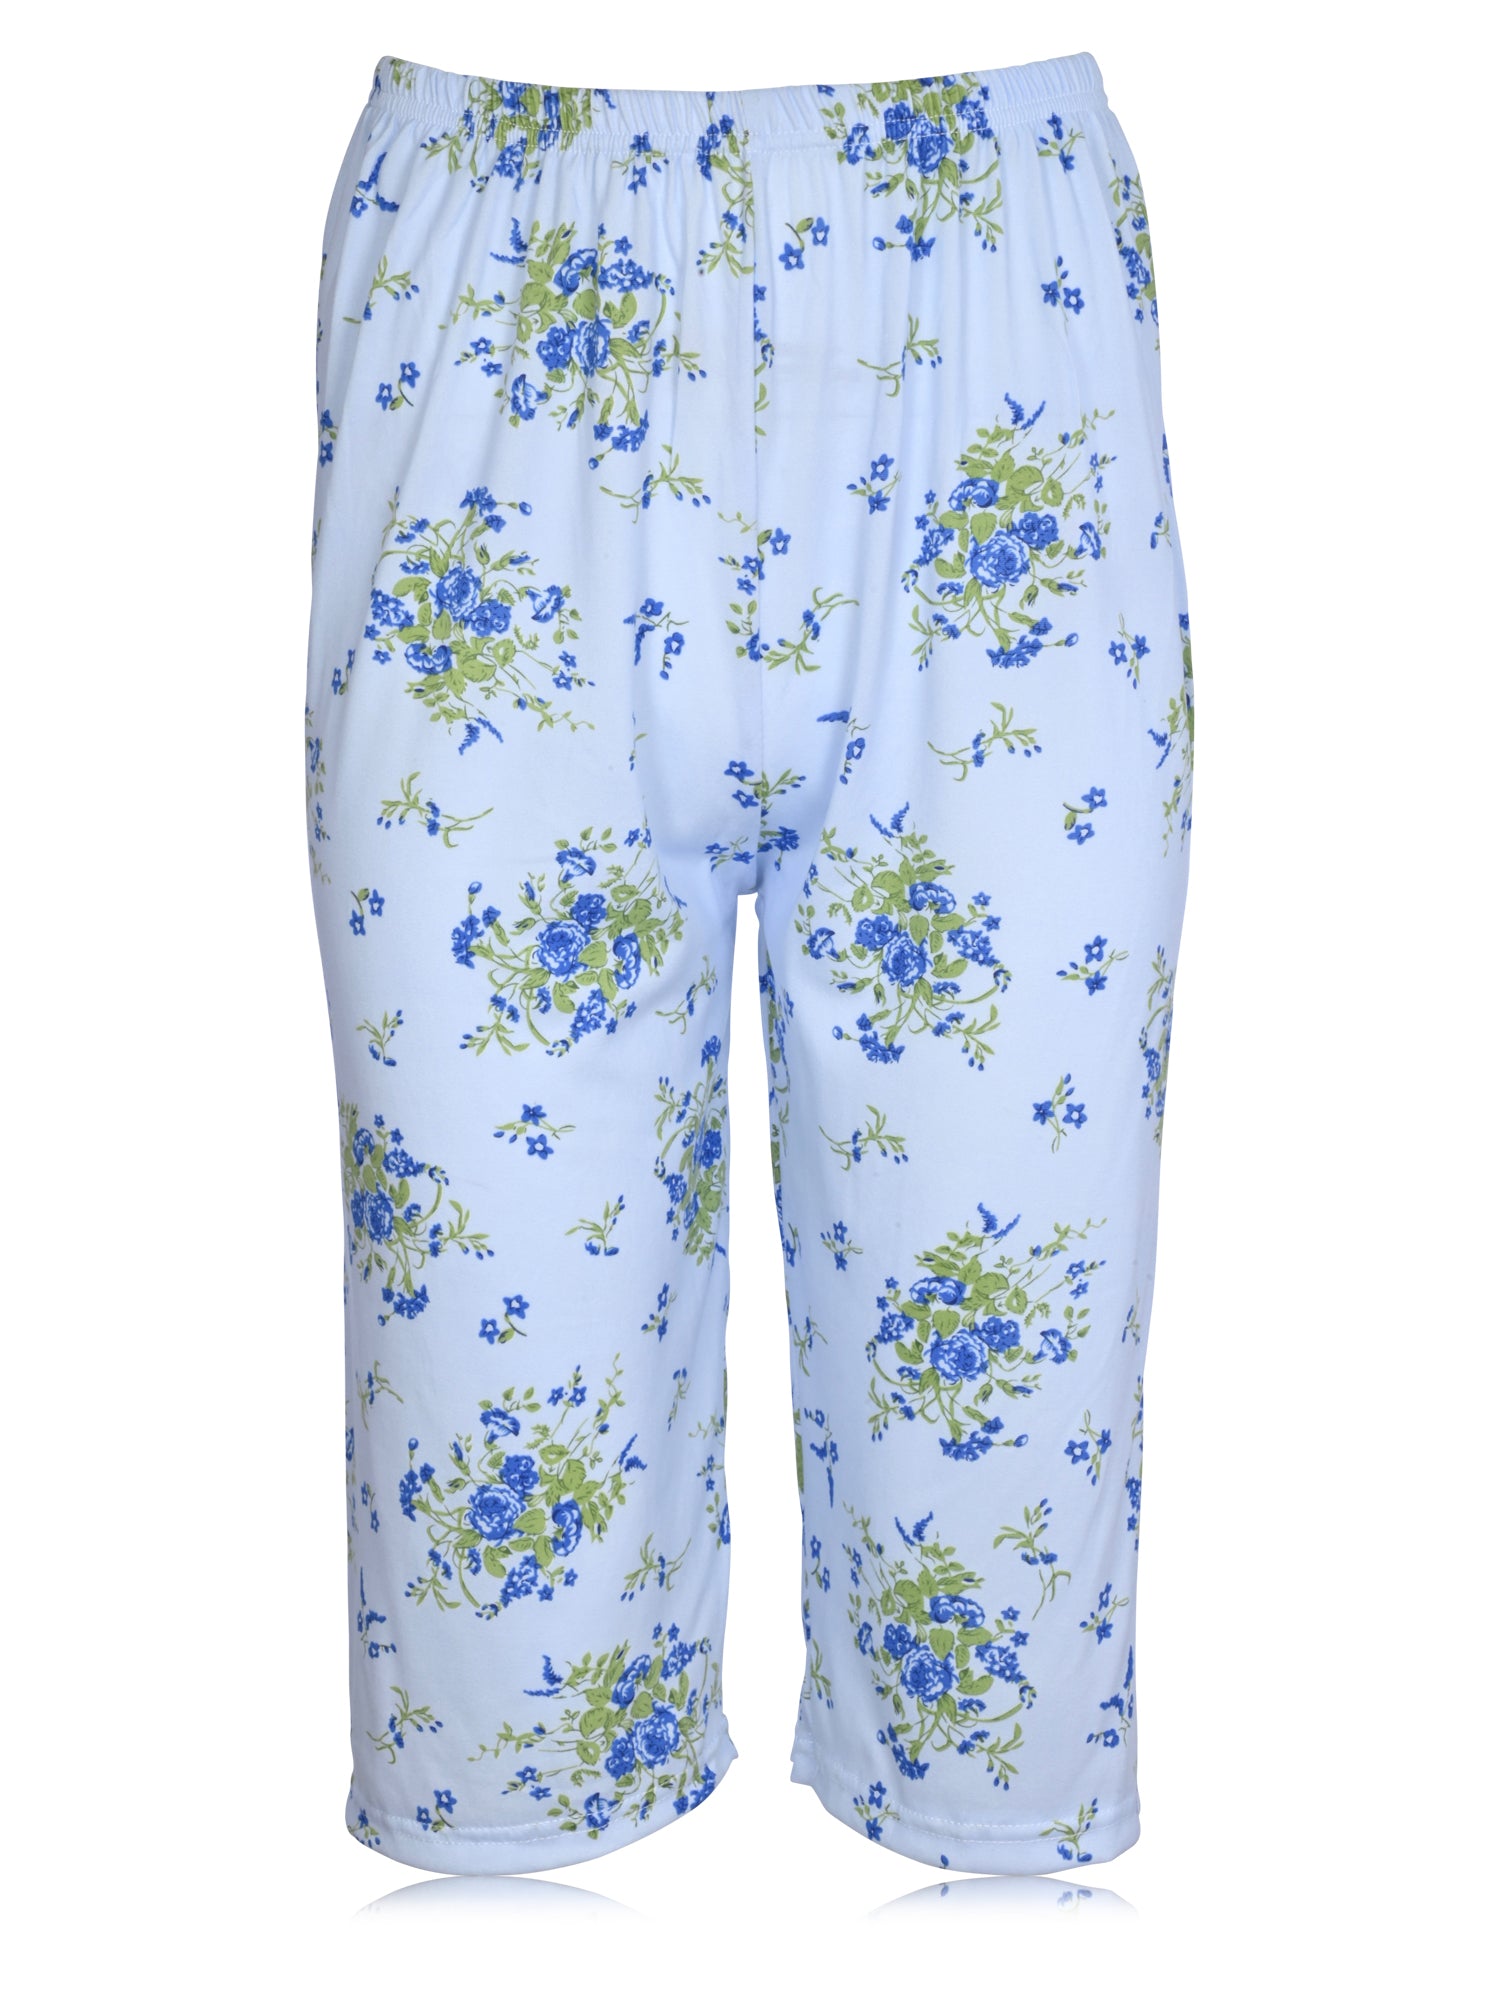 Pierre Donna Women's Cotton Pajama set With Pants - Women